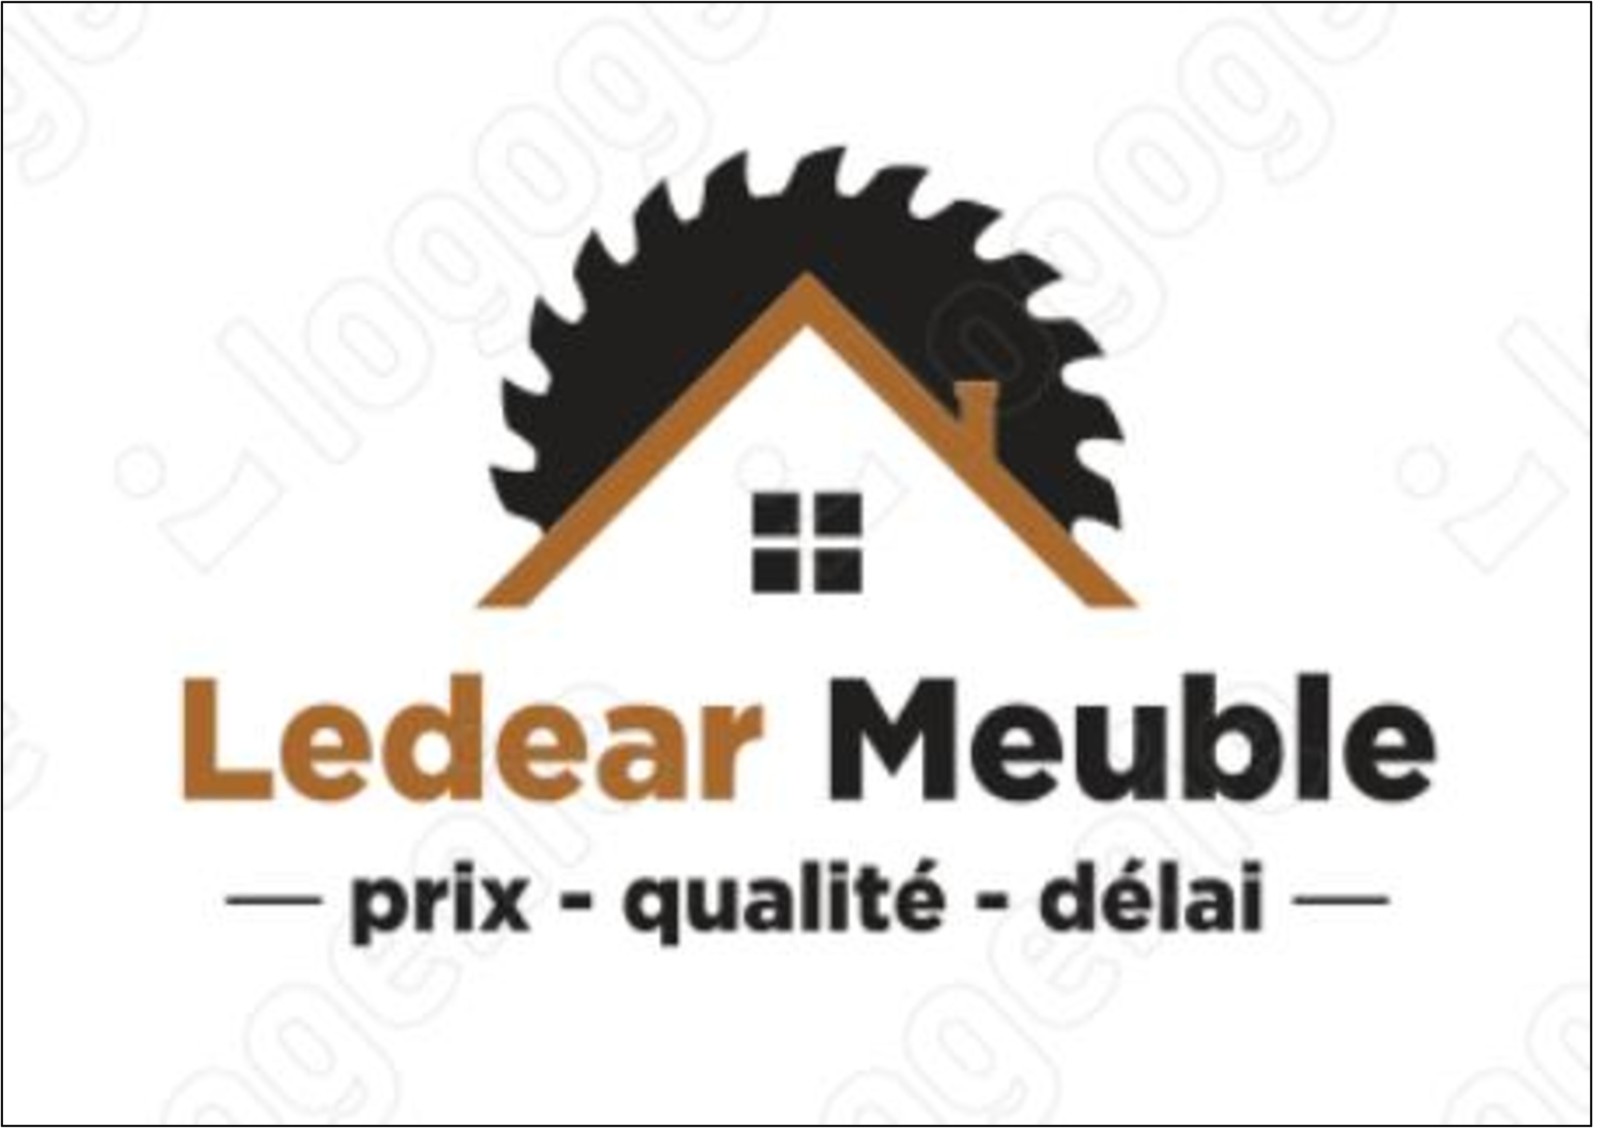 Leader Meuble